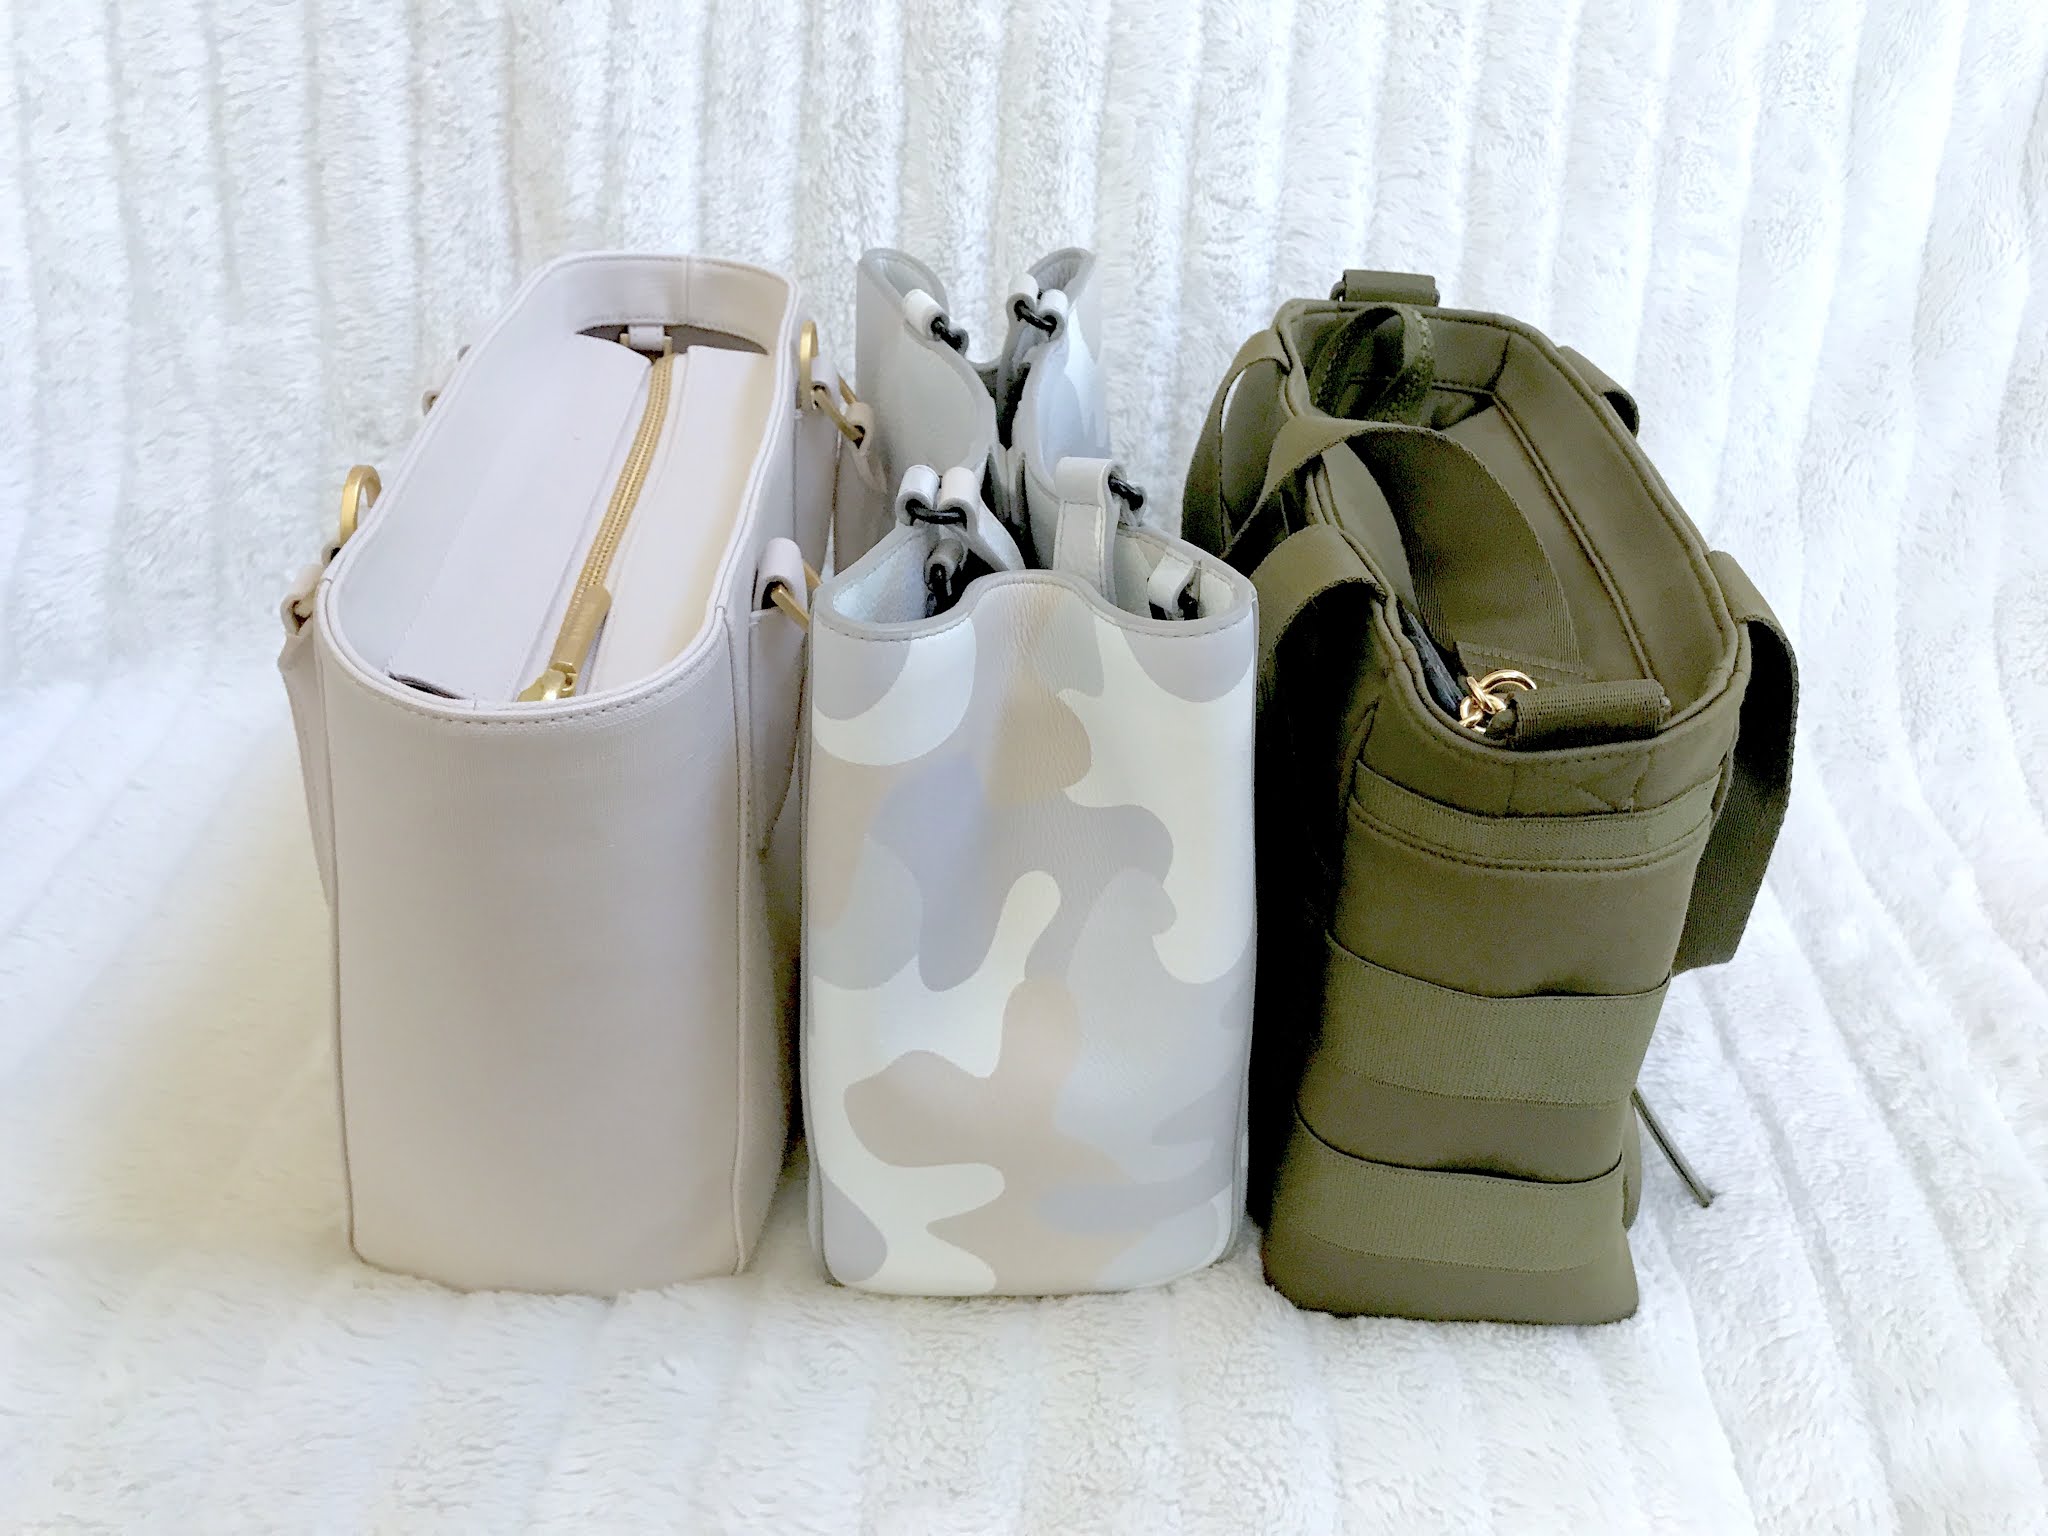 dagne dover large and medium diaper backpack comparison｜TikTok Search